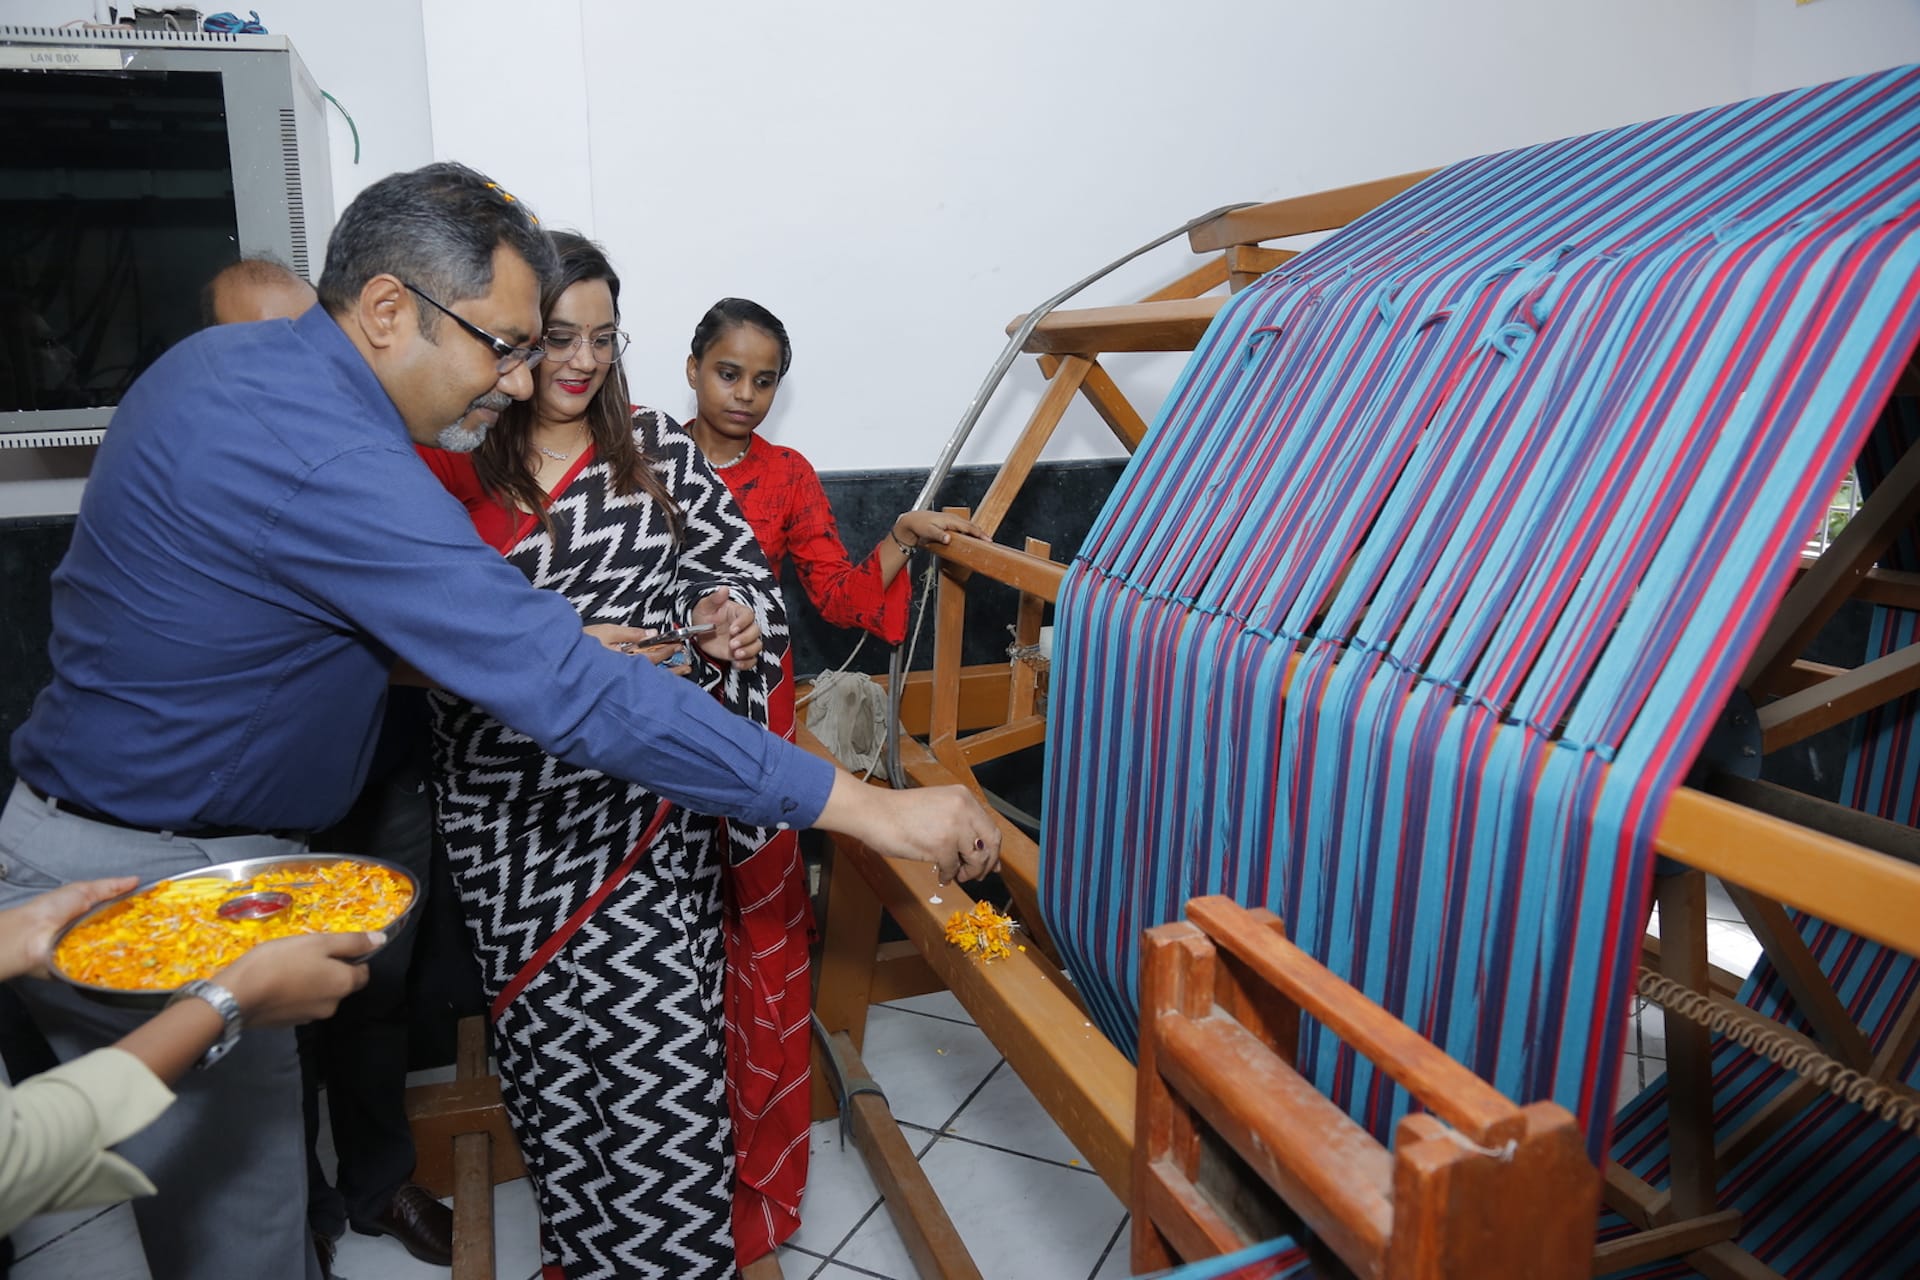 Tata Power Delhi launches its first handloom unit ahead of National Handloom Day